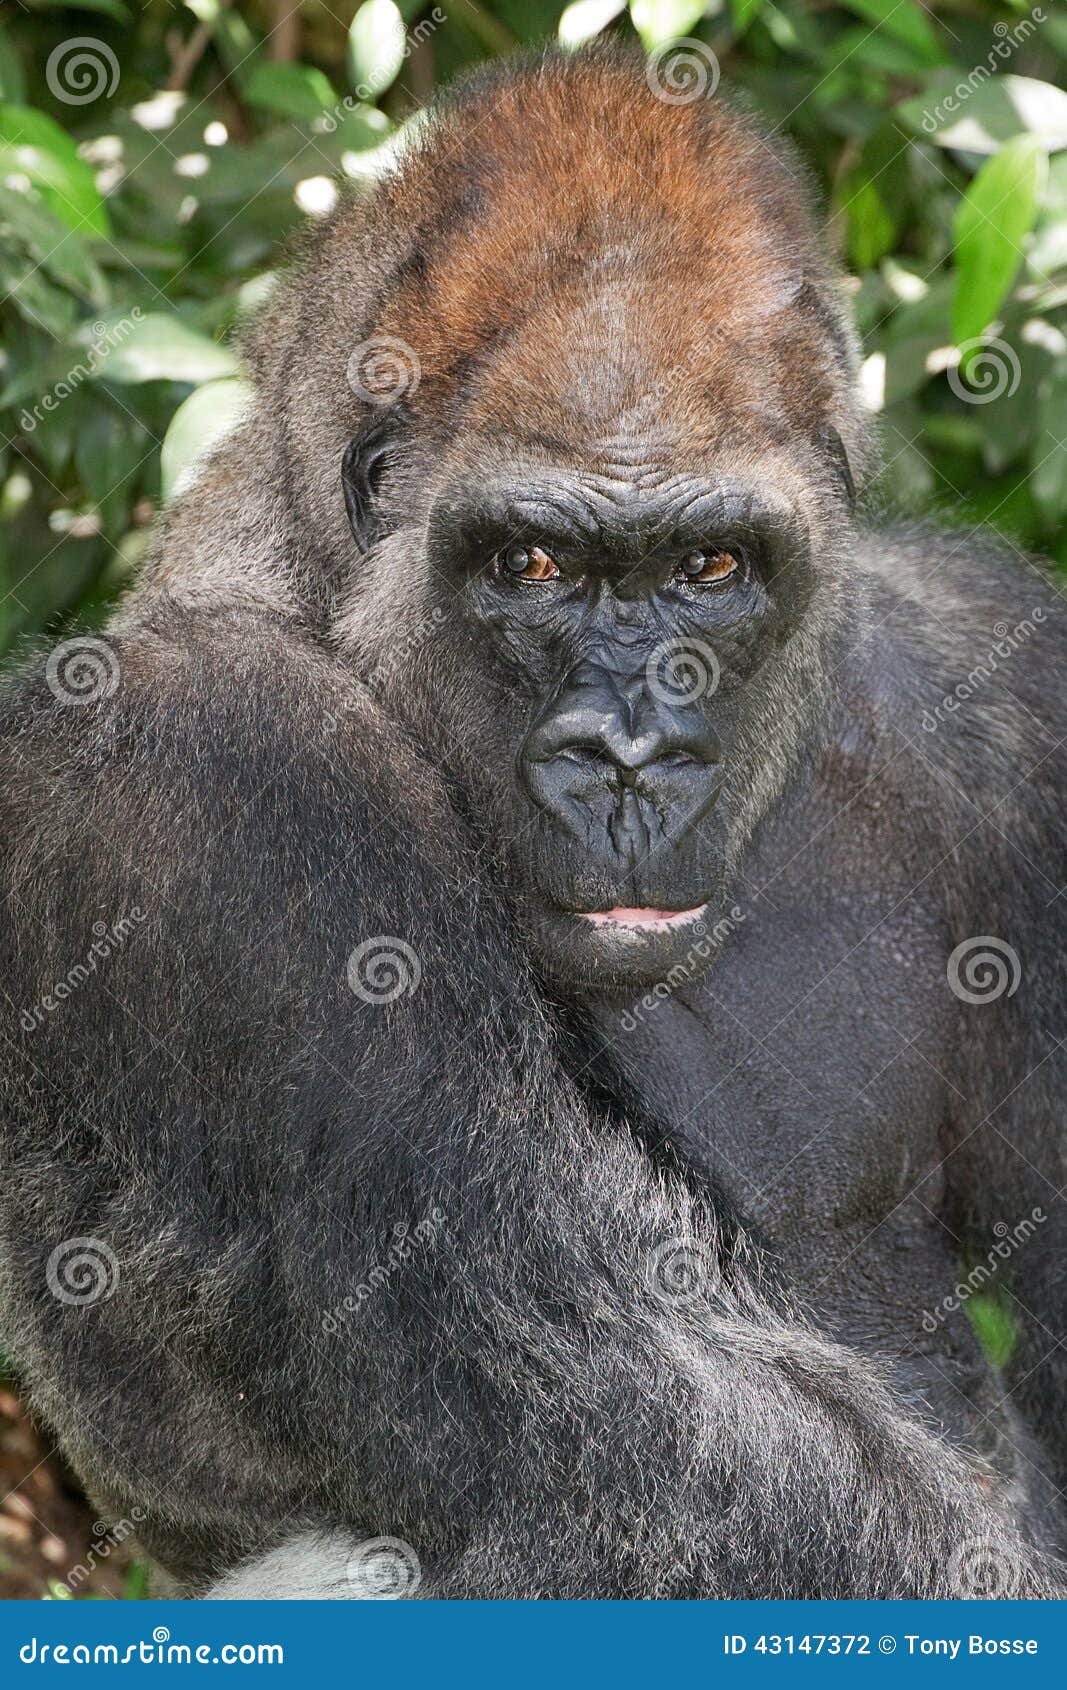 Portrait of a Silverback Gorilla. An up-close portrait of an old, aging endangered Silverback Gorilla